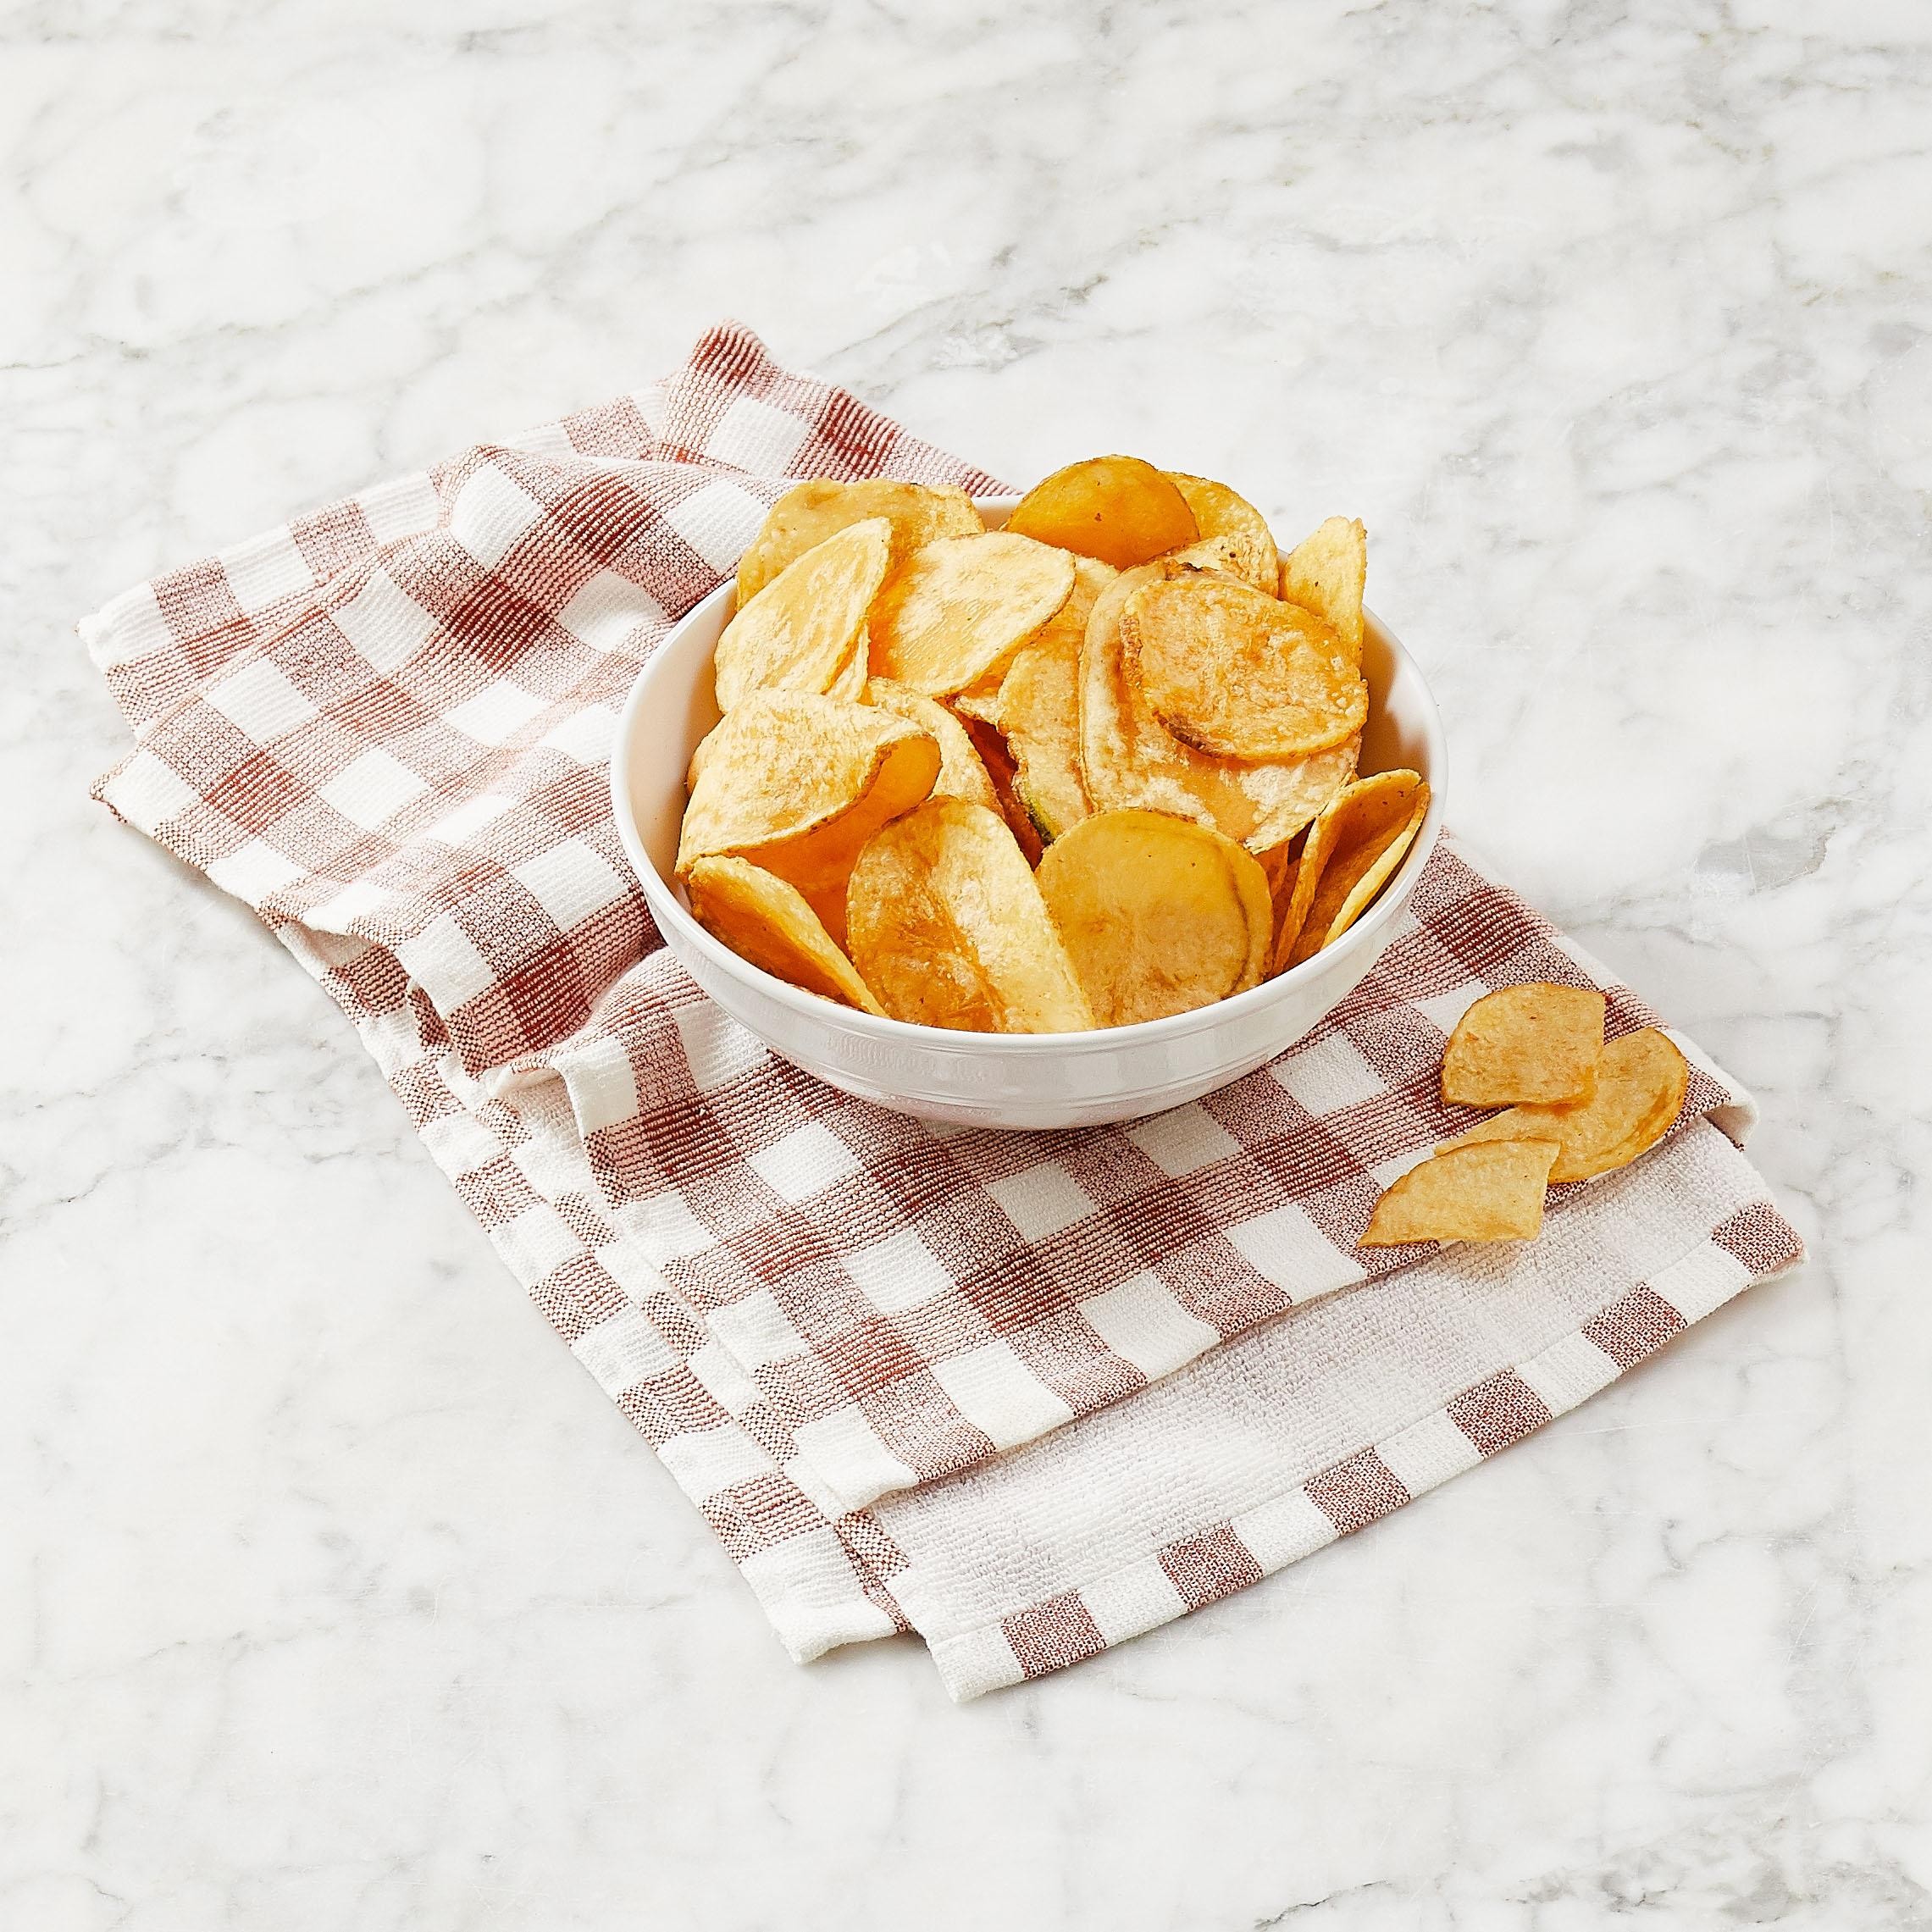 Housemade Maine Potato Chips